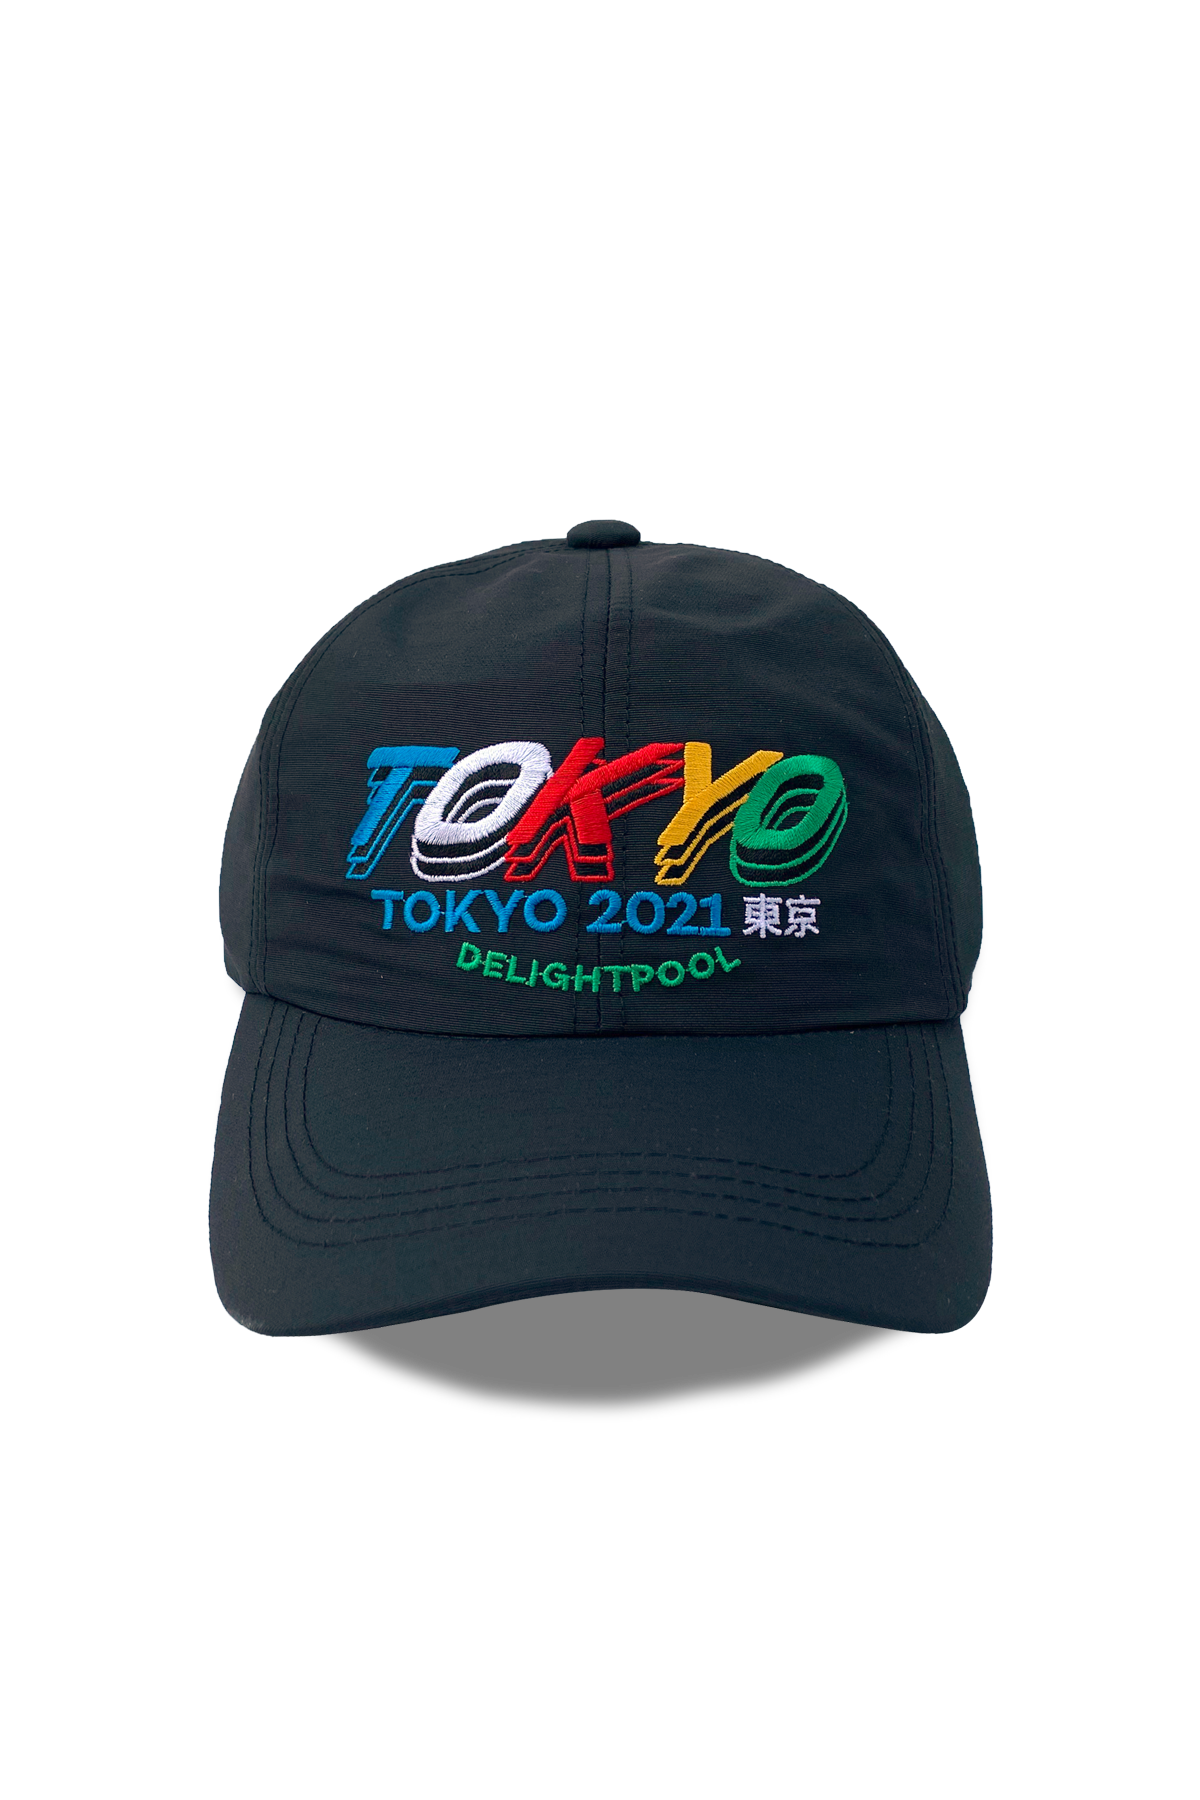 TOKYO 2021 CAP (Tokyo 2020 Olympic edition) - Black